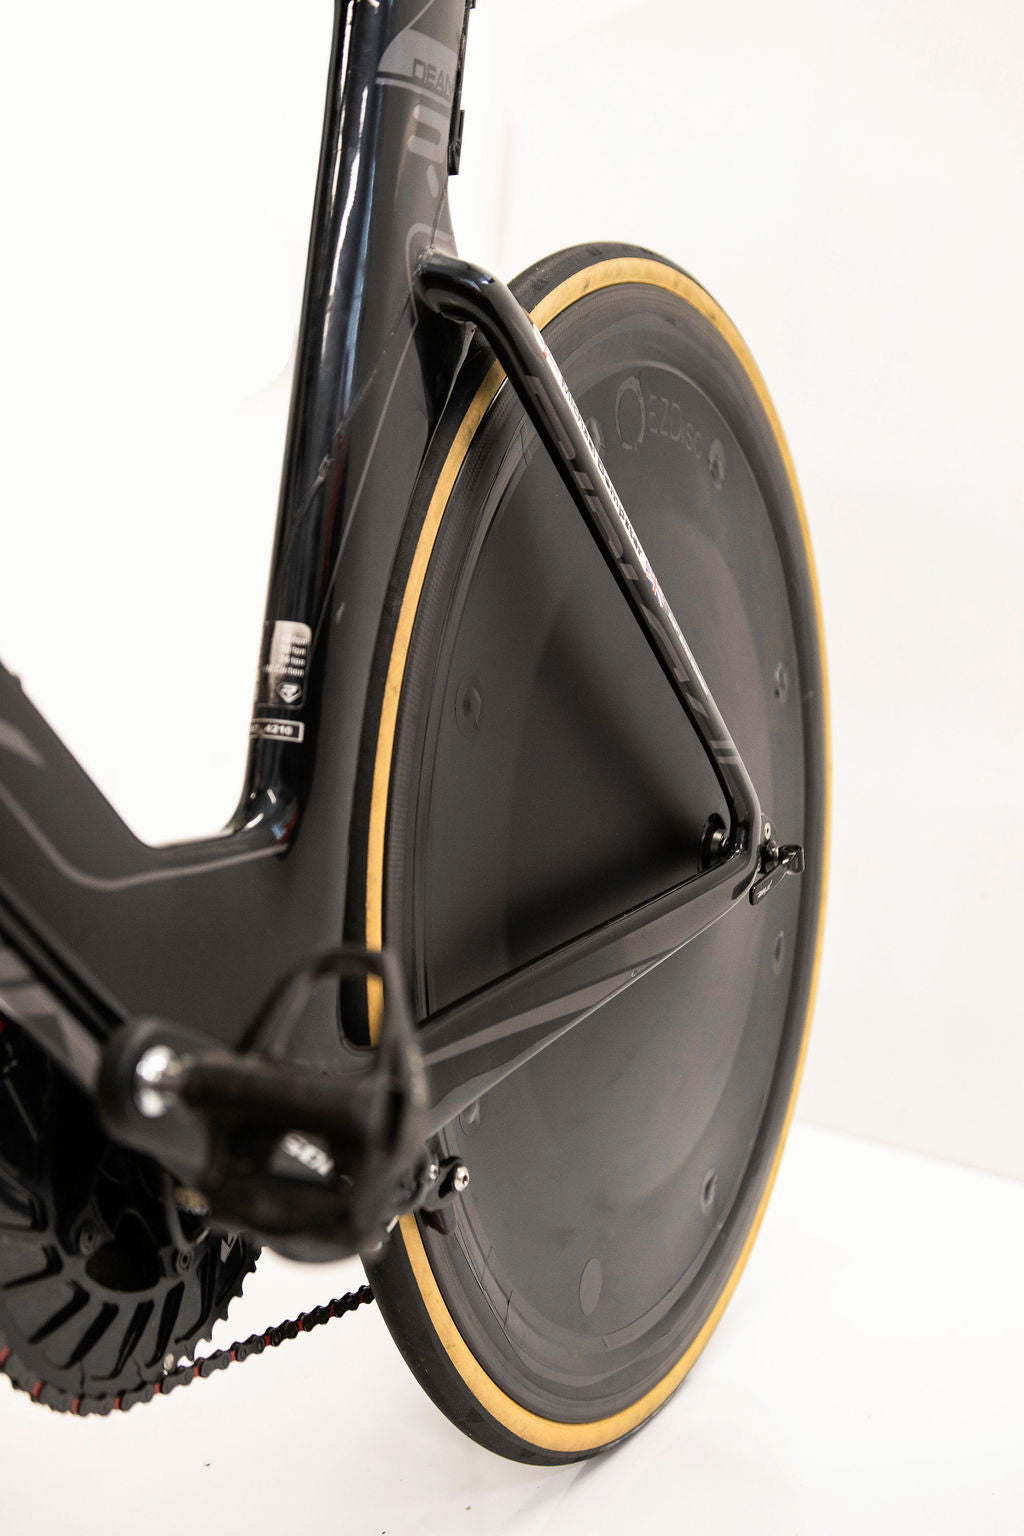 EZ Disc Aero Wheel Cover for a Prime Wheel 700c for a 20mm - 47mm Rim Brake 3 Disc Wheel Covers Disc Wheel Triathlon Cycling Time Trial 